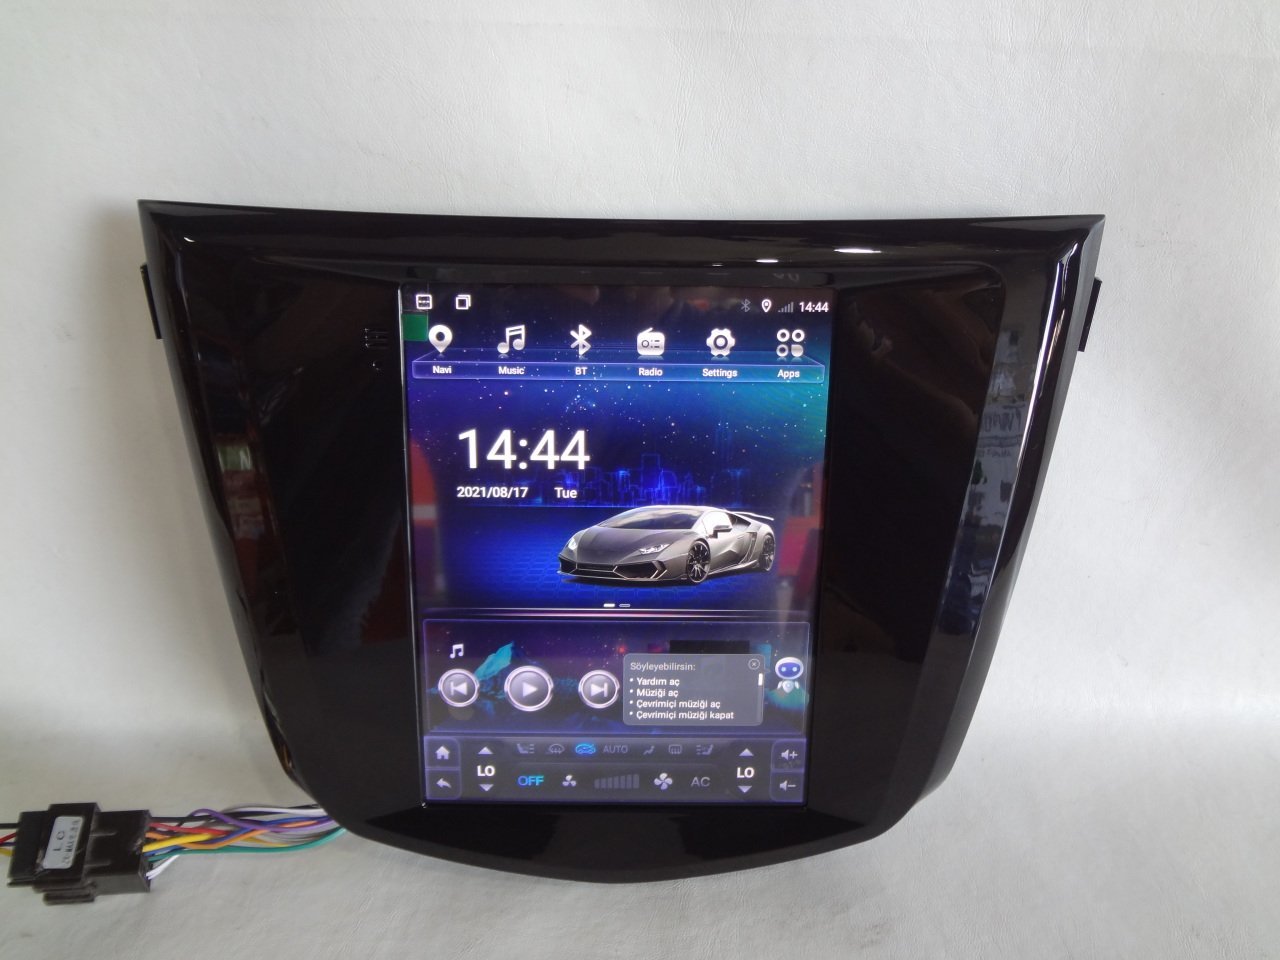 Navix Nissan Qashqai Android 11 Tesla 10.4 inç 4+64 CarPlay